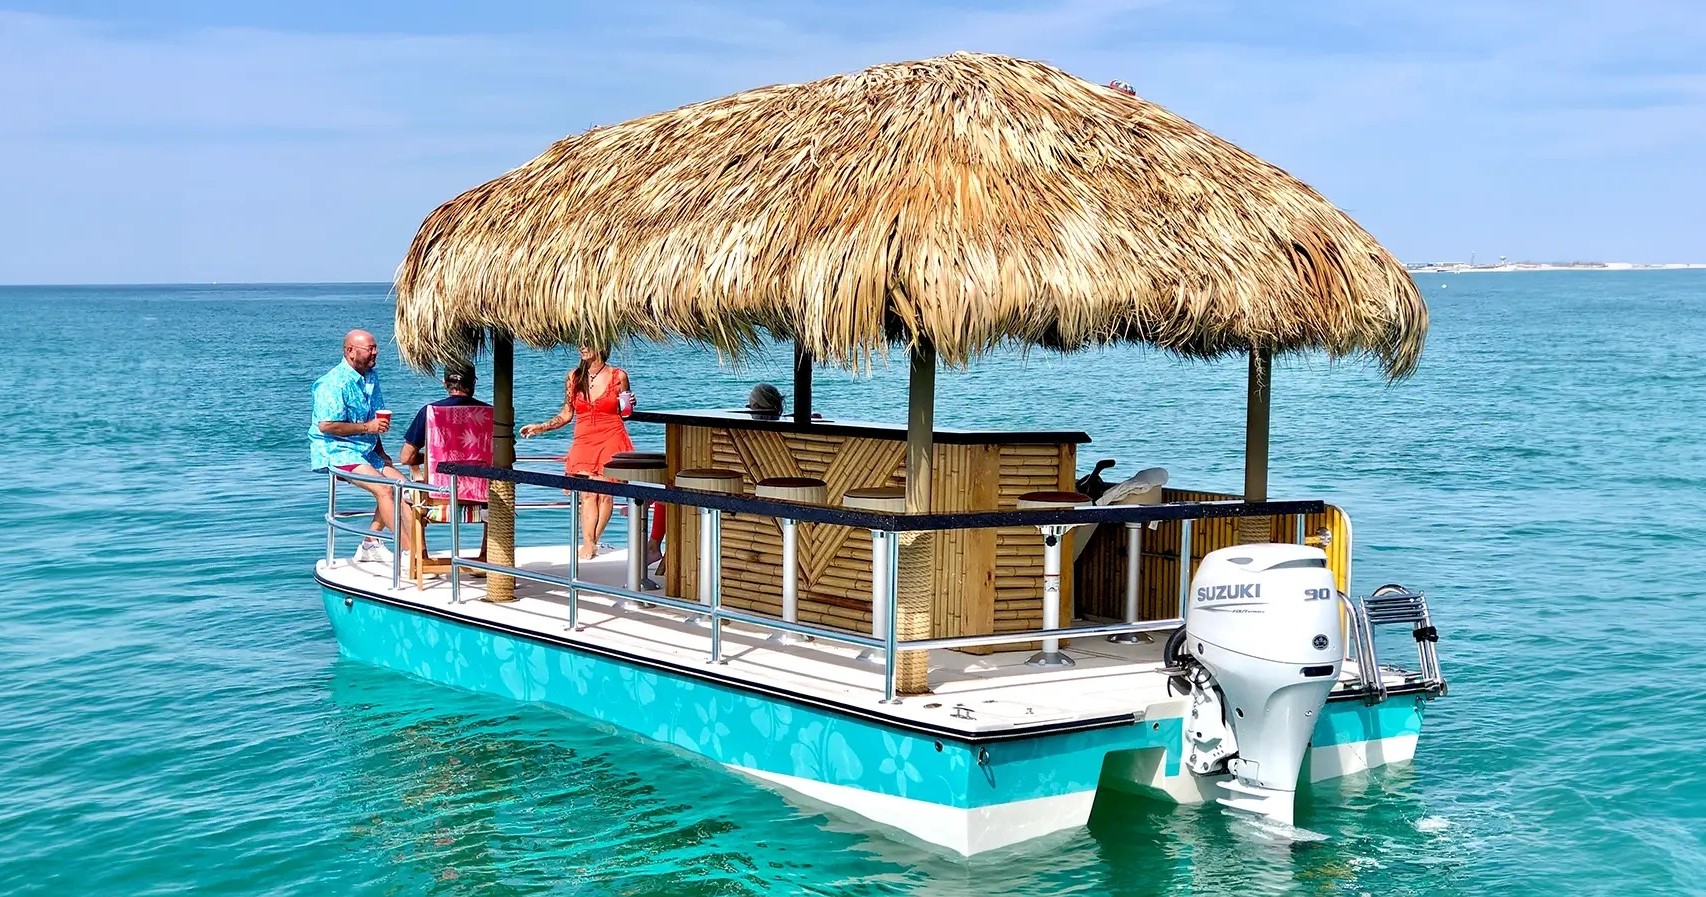 Thumbnail image for Private Captained Tiki Booze Cruise on Lake Pontchartrain (BYOB)